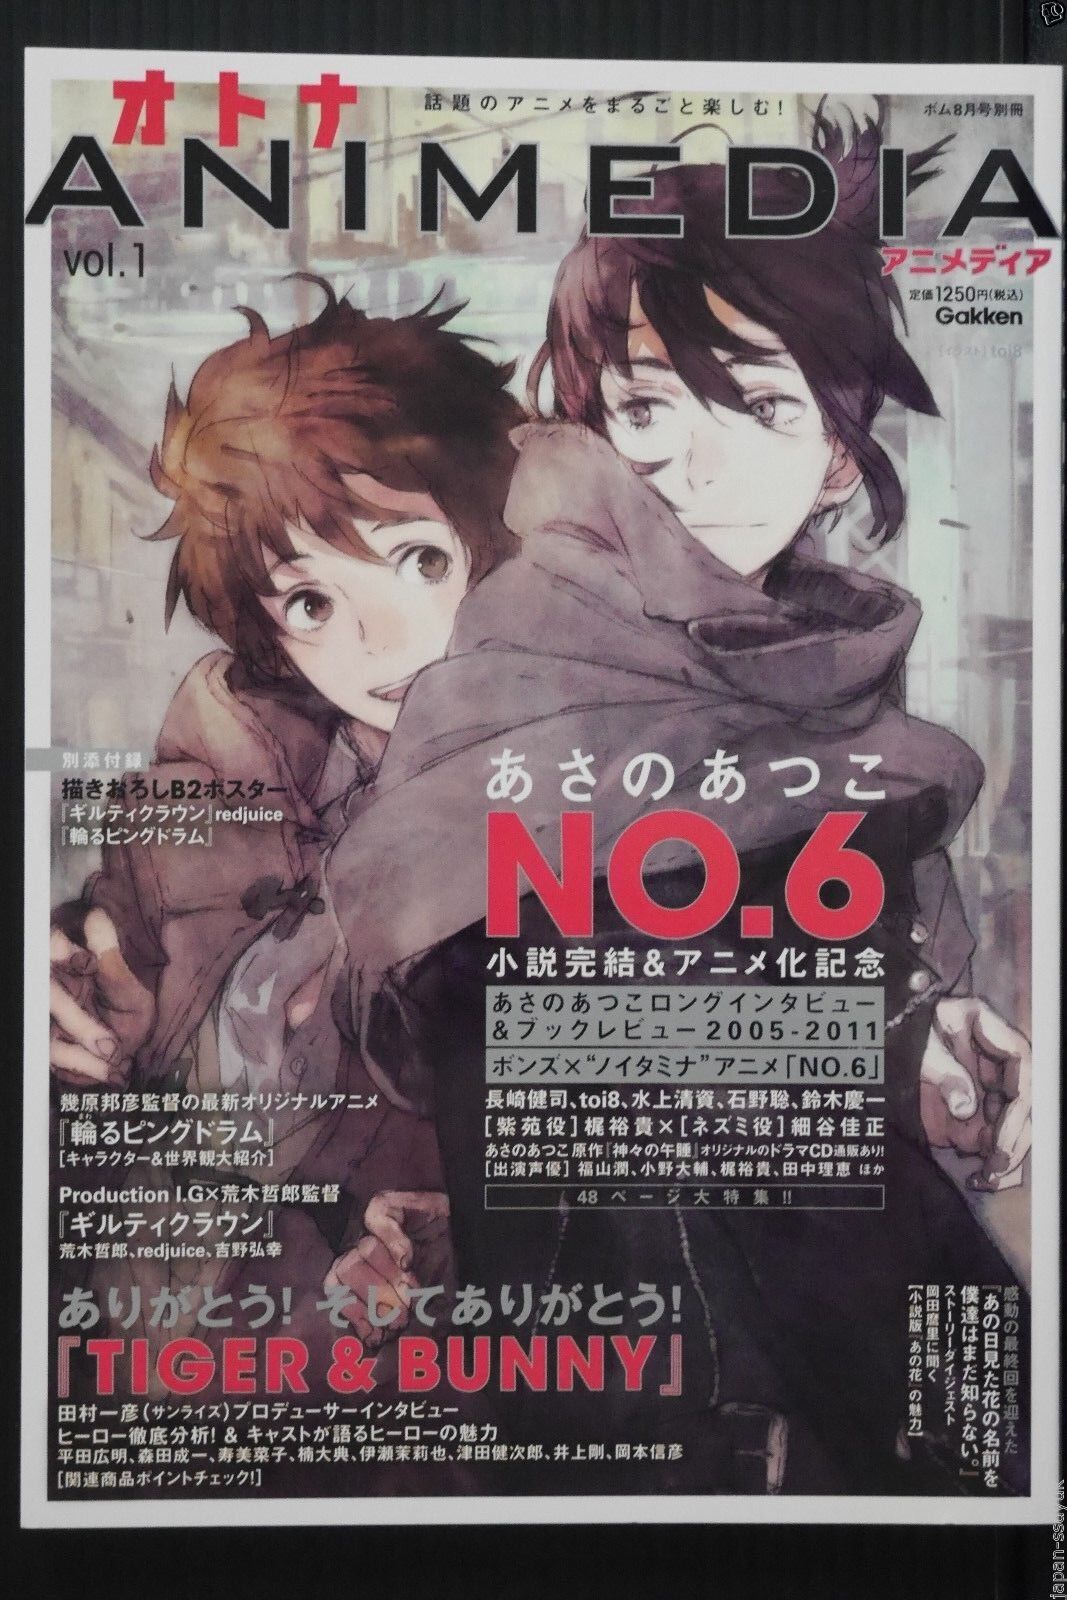 Otona Animedia Vol.1 August 2011 Magazine - Japan Edition